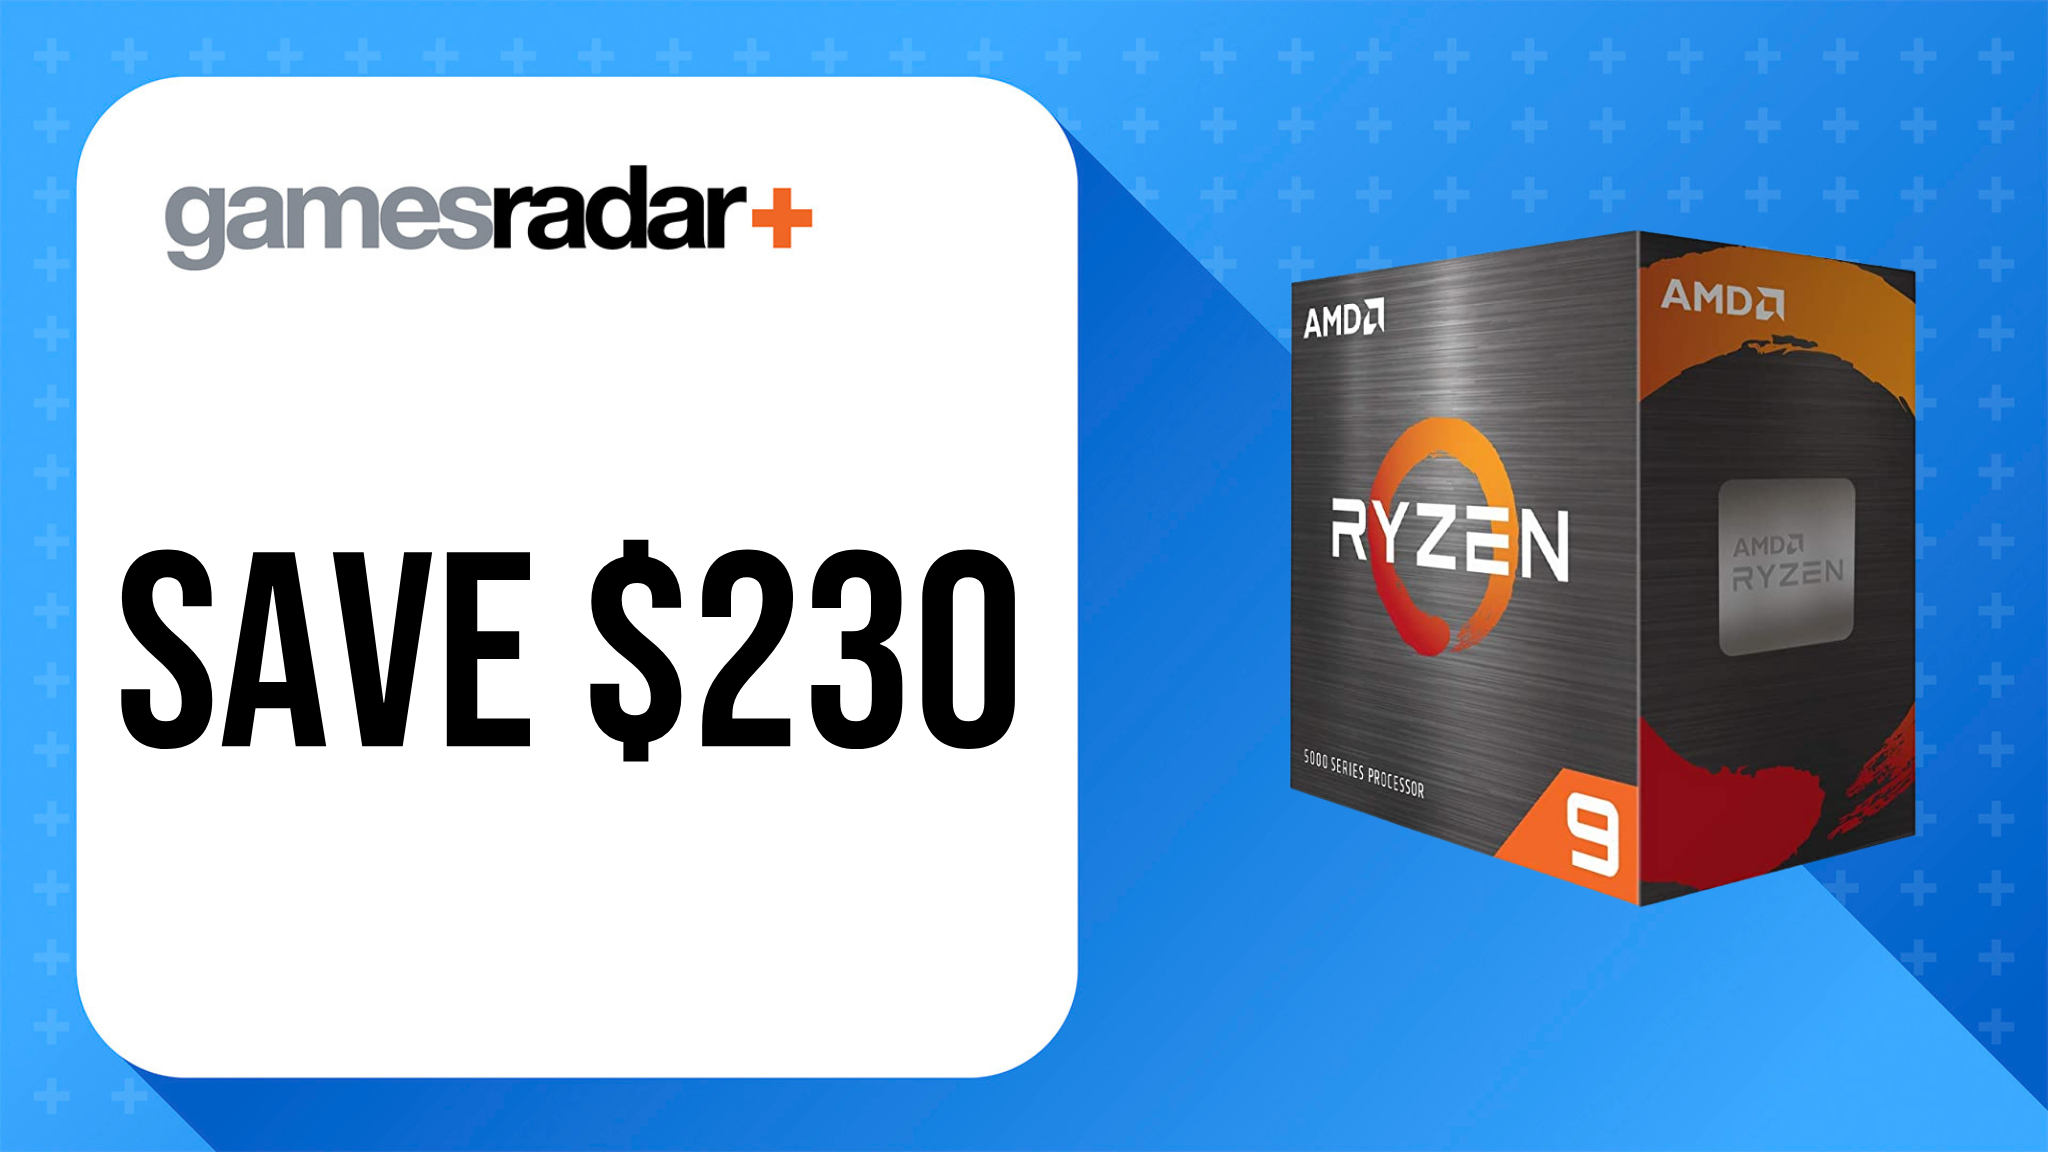 AMD Ryzen 9 5900X CPU deal image with $230 saving stamp